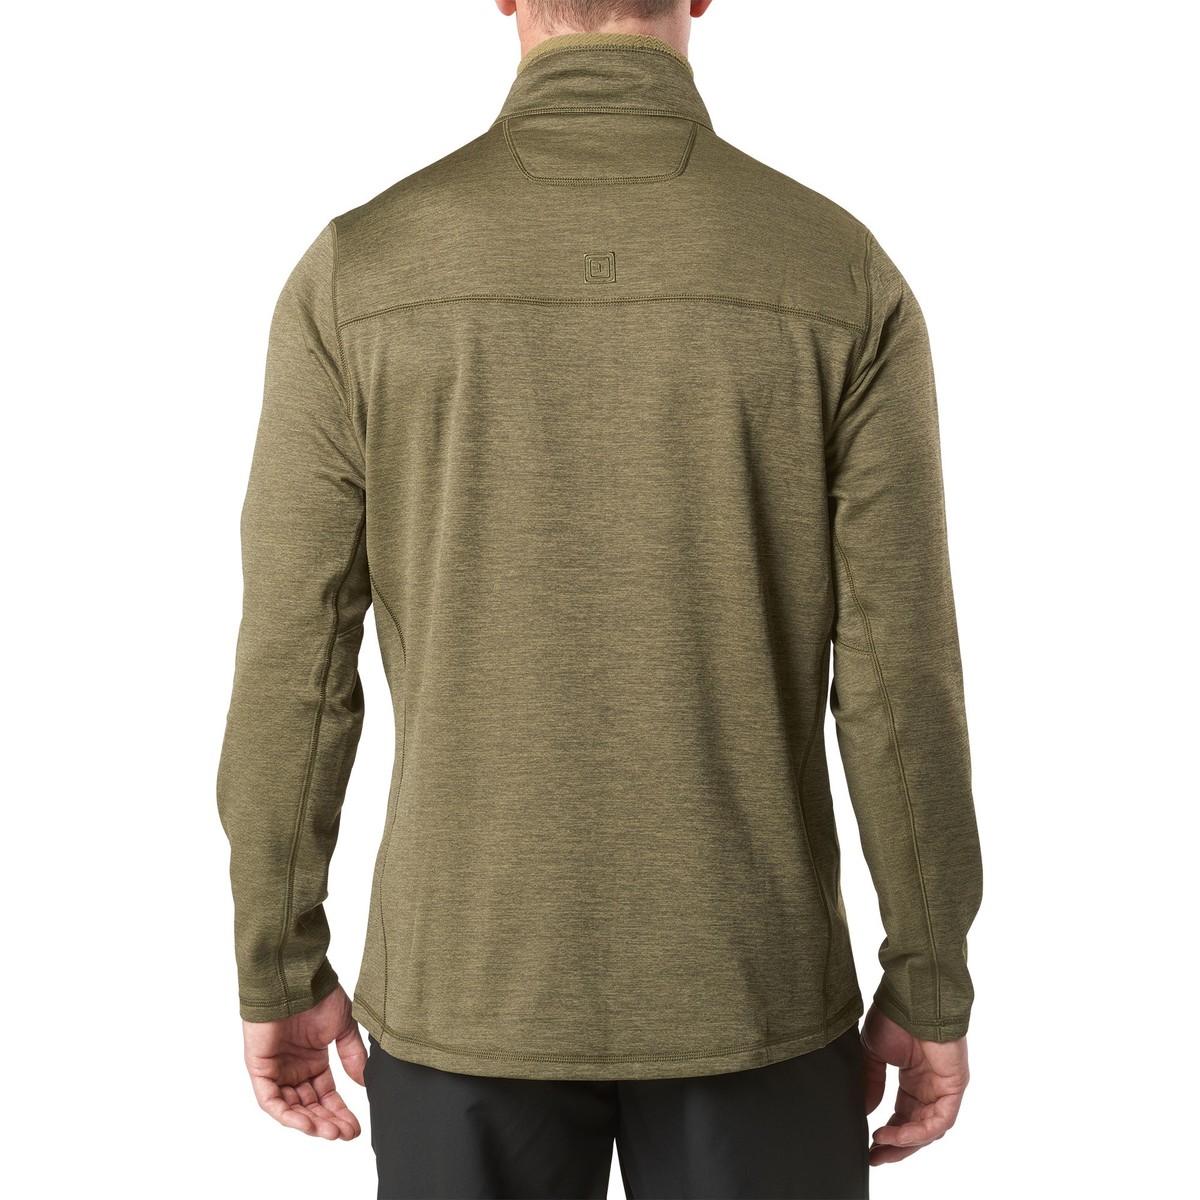 Tactical Uniform for Military, Law Enforcement | Buy 5.11 RECON HALF ...